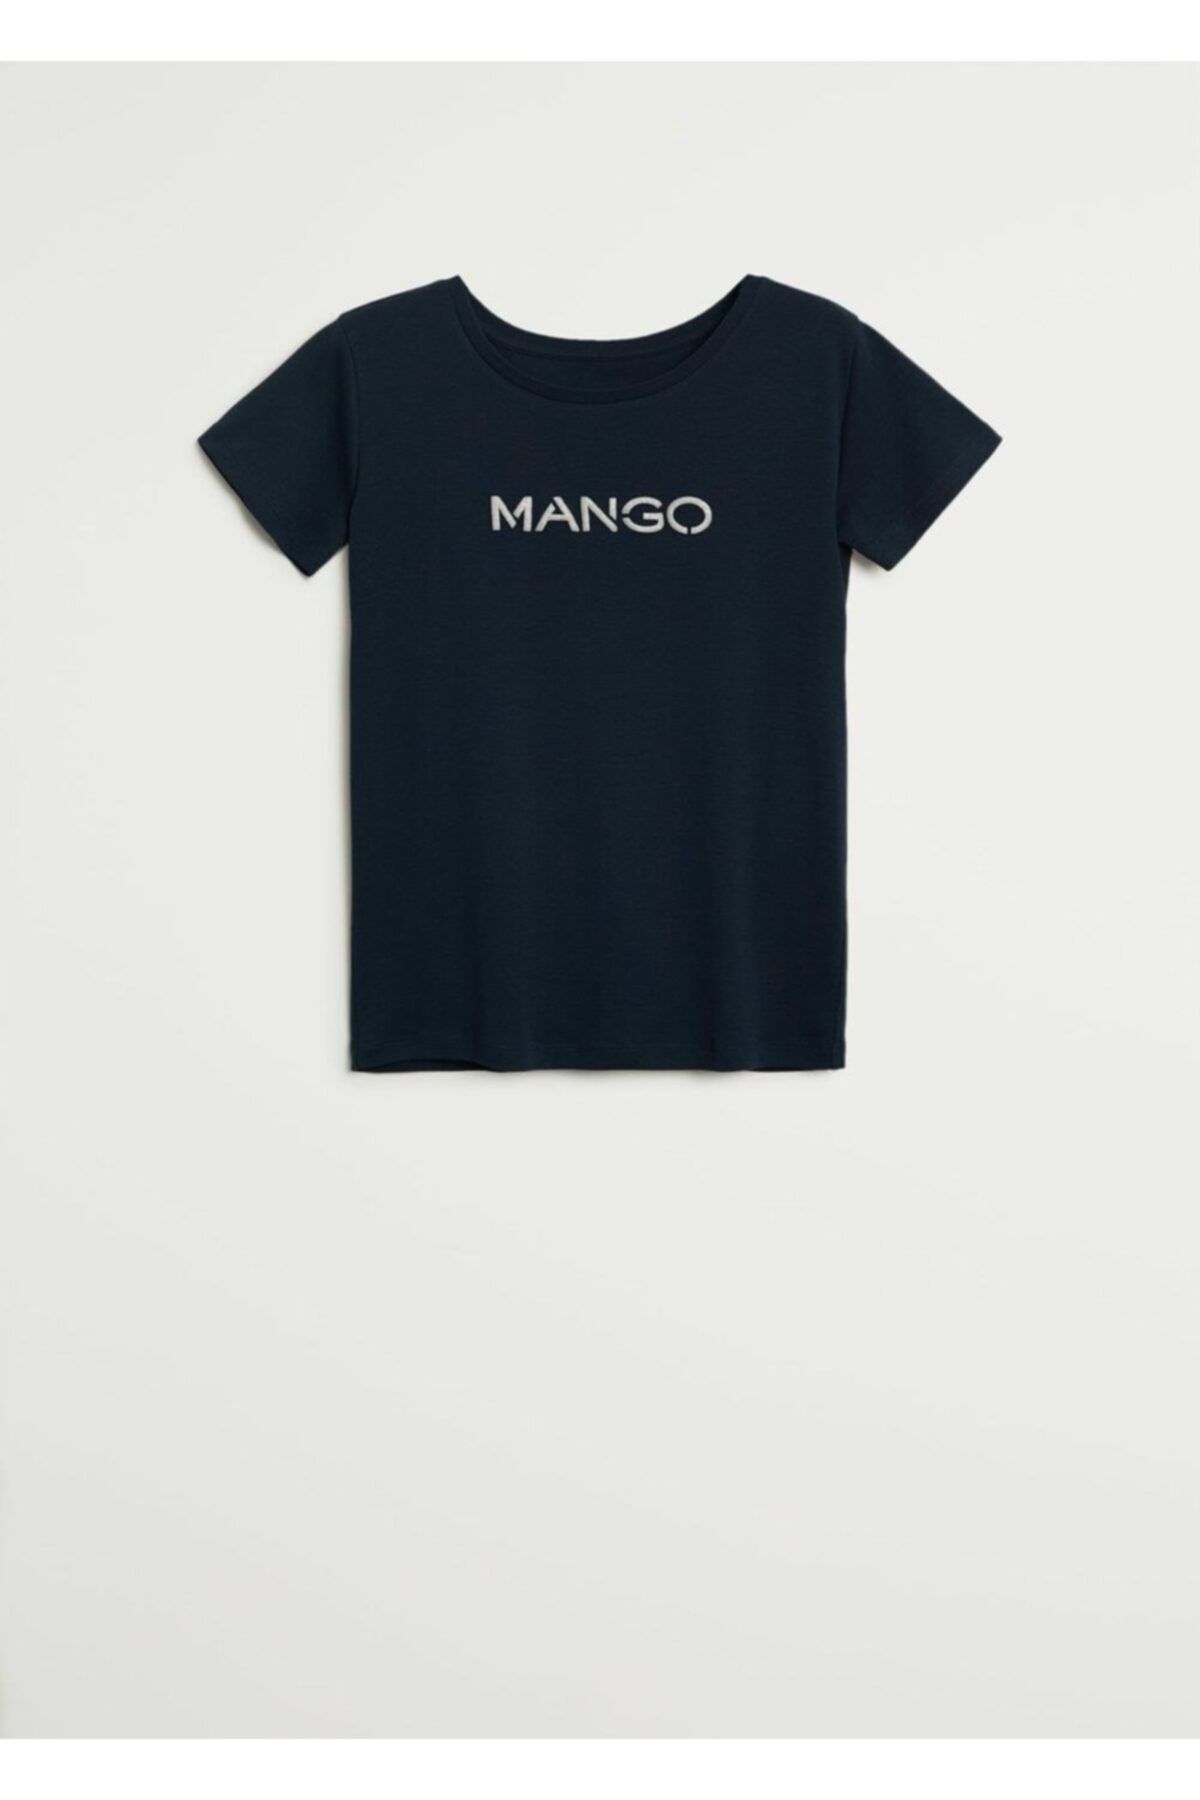 MANGO Kadın Lacivert Pamuklu Logolu T-Shirt